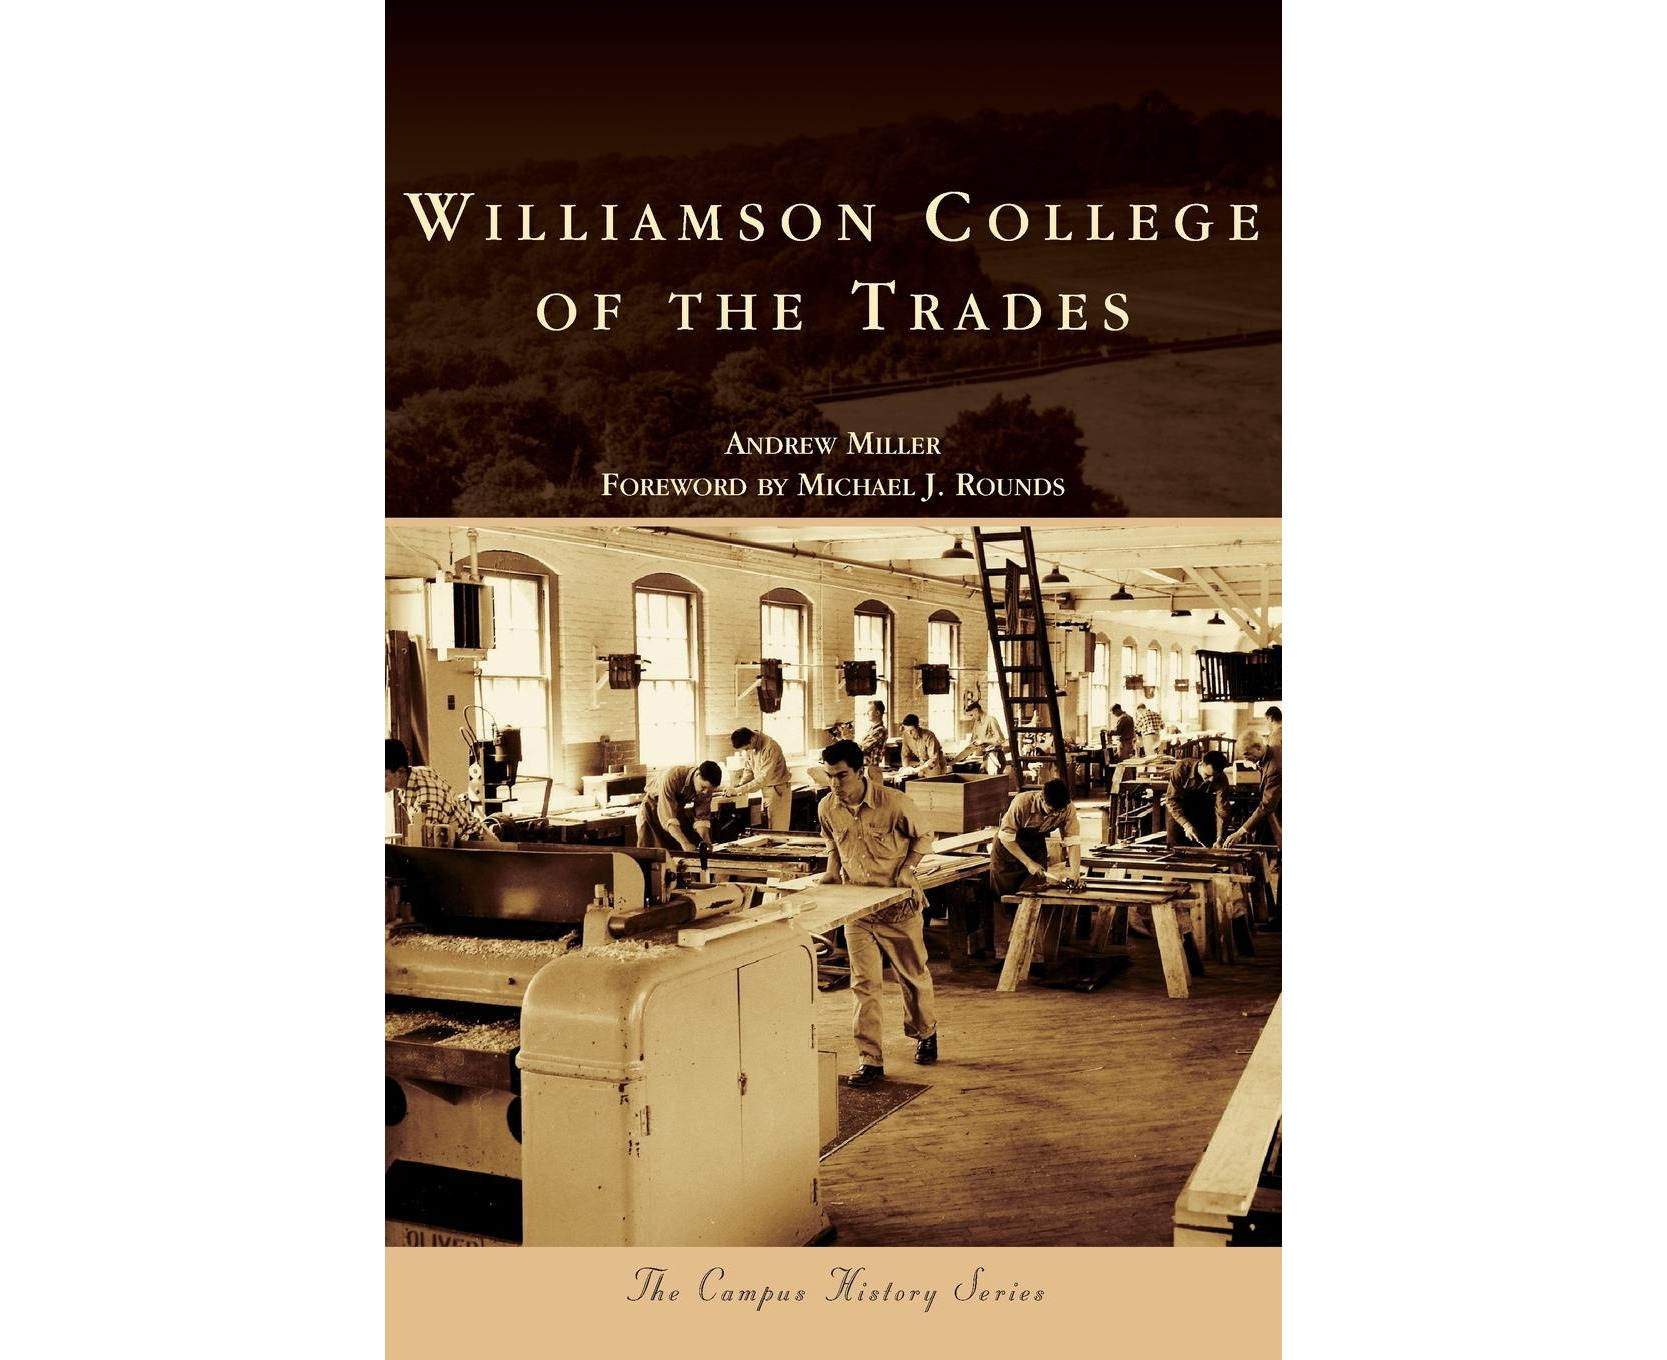 Williamson College of the Trades